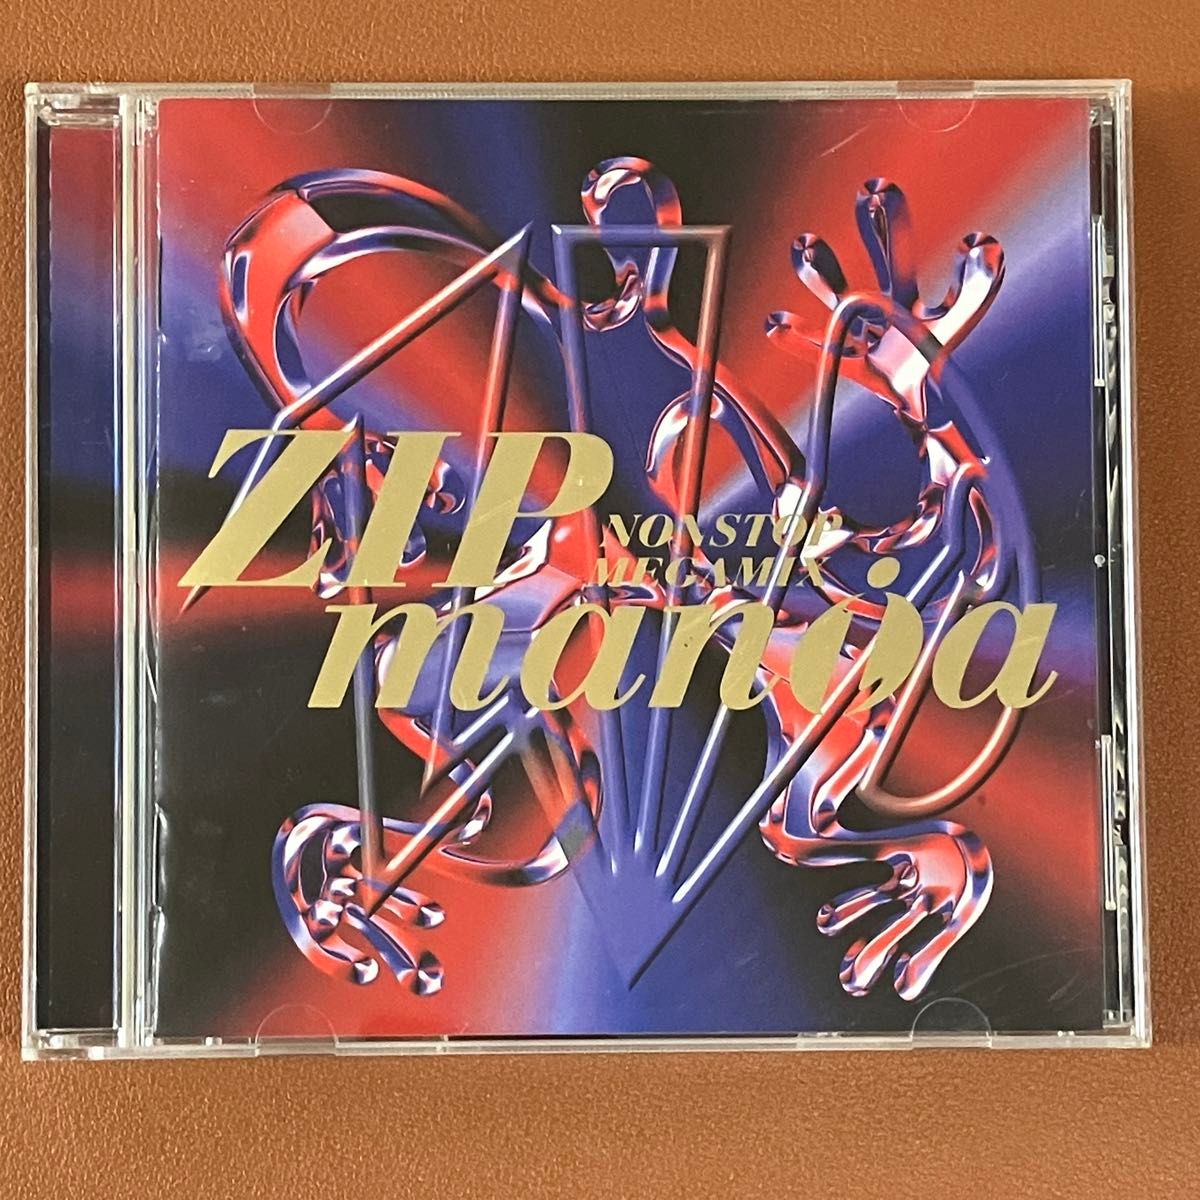 ZIP mania (ダンスマニア、ZIP FM コラボノンストップミックスCD)